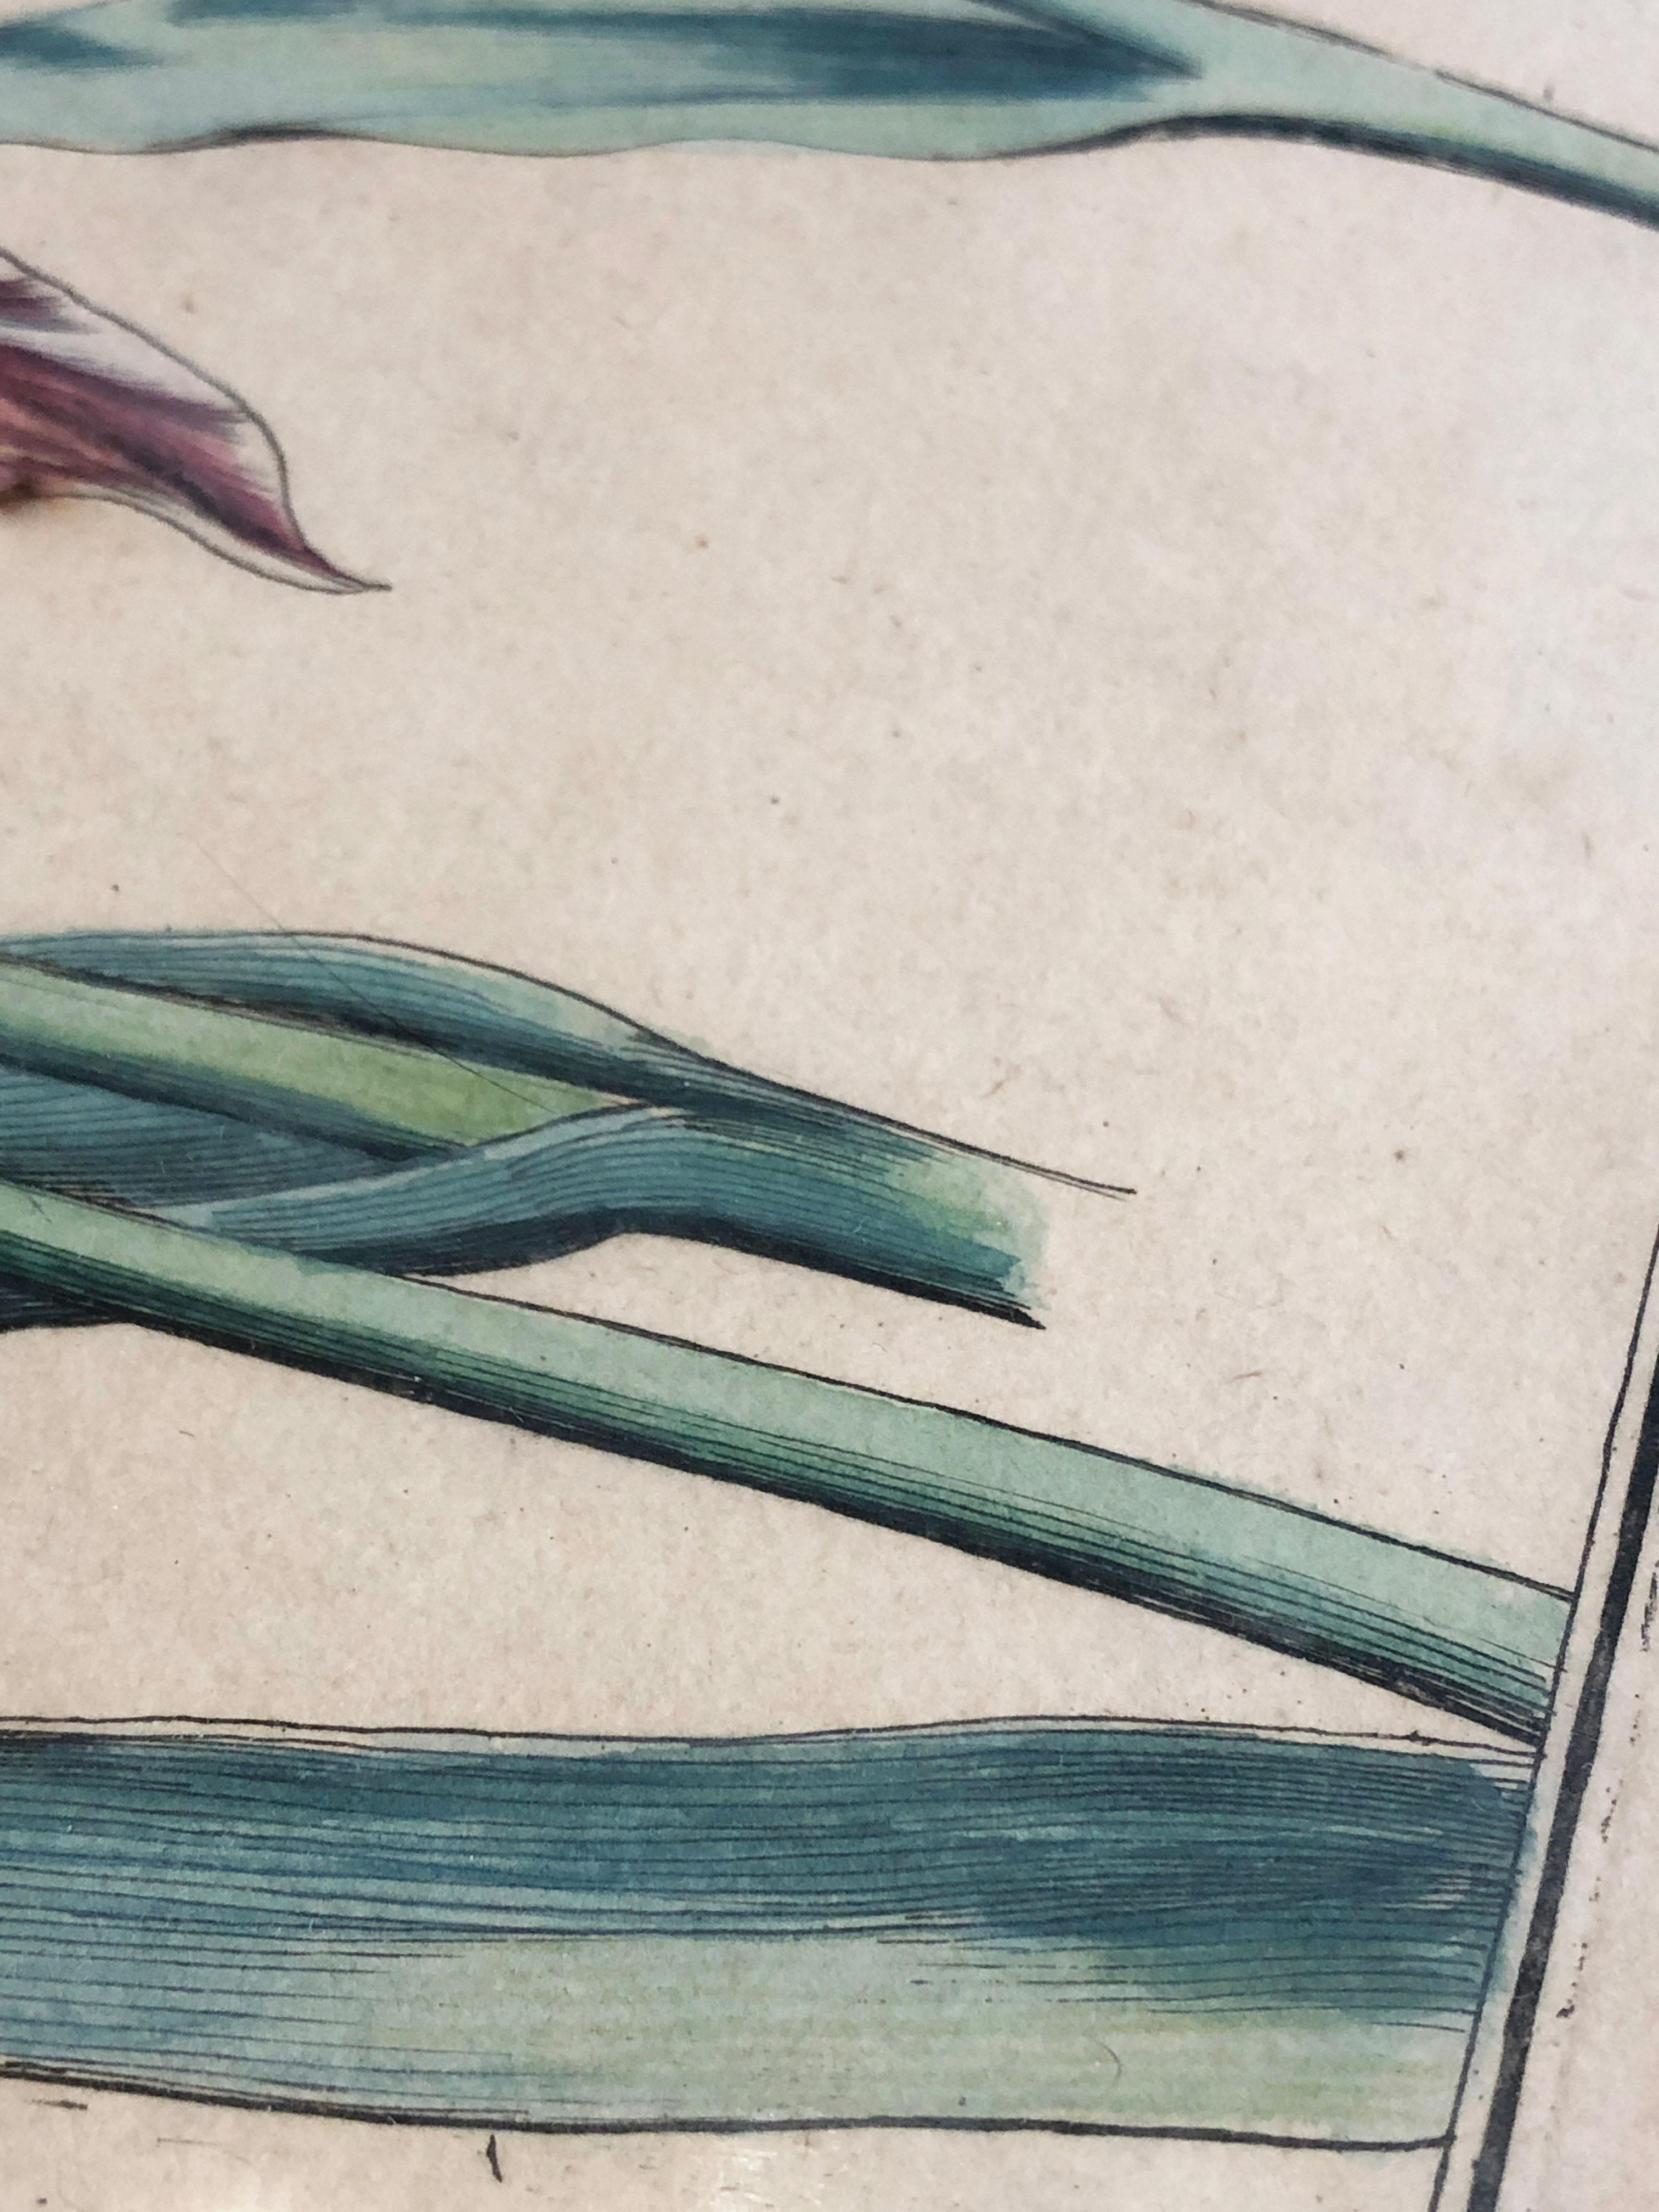 Paper Emanuel Sweert - Maria Merian - Daniel Rabel - Copper engraving 4 tulips plate 5 For Sale